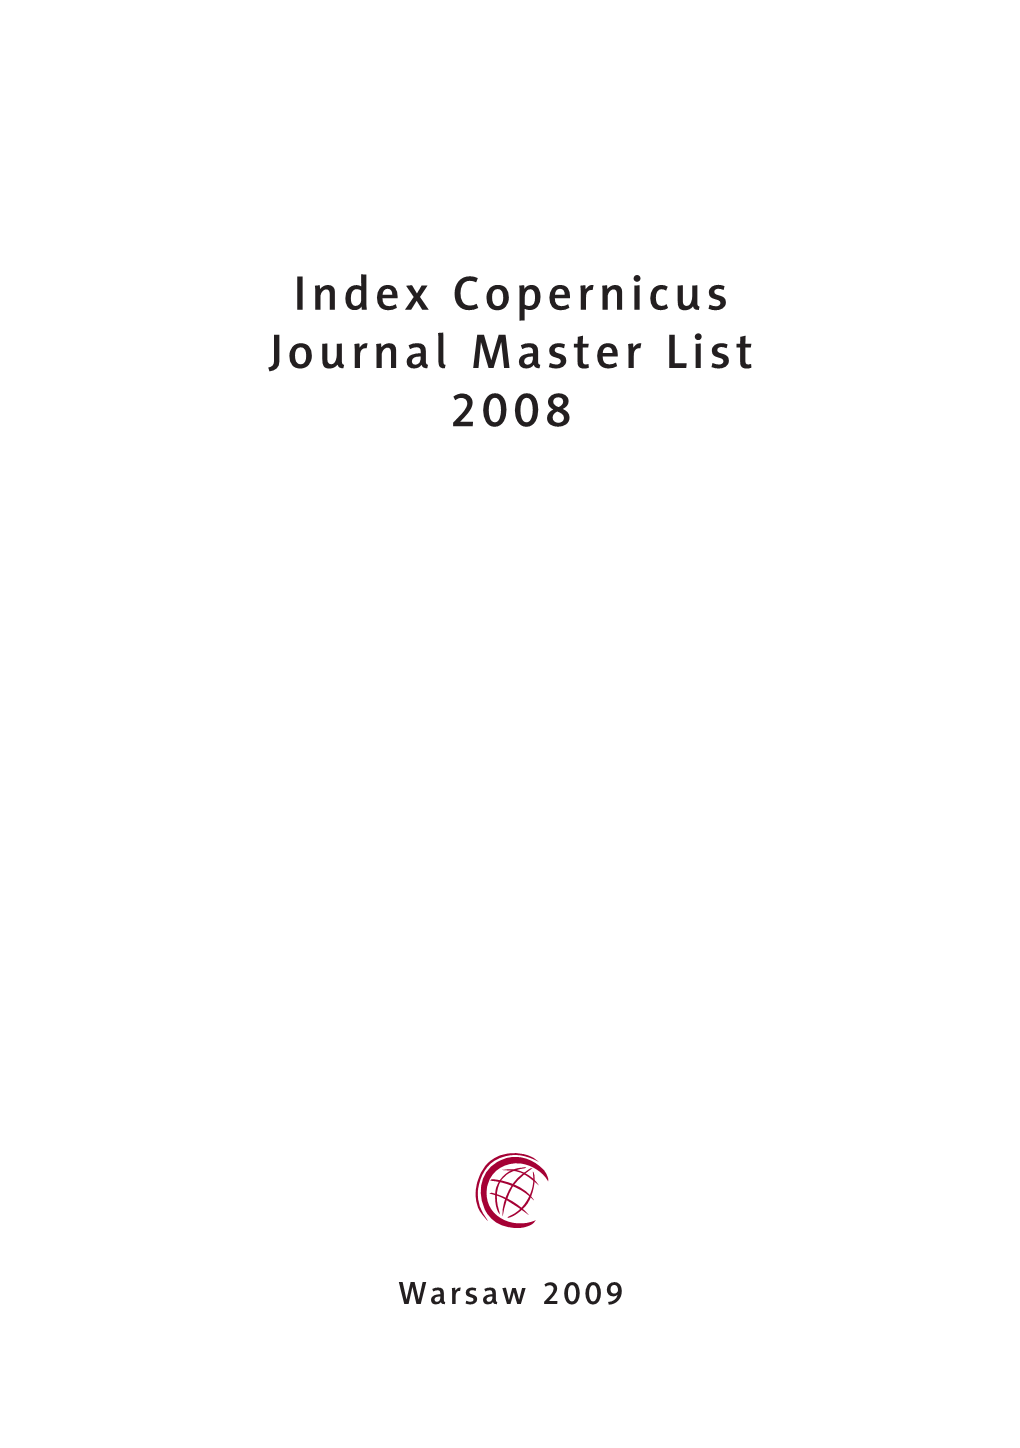 Index Copernicus Journal Master List 2008